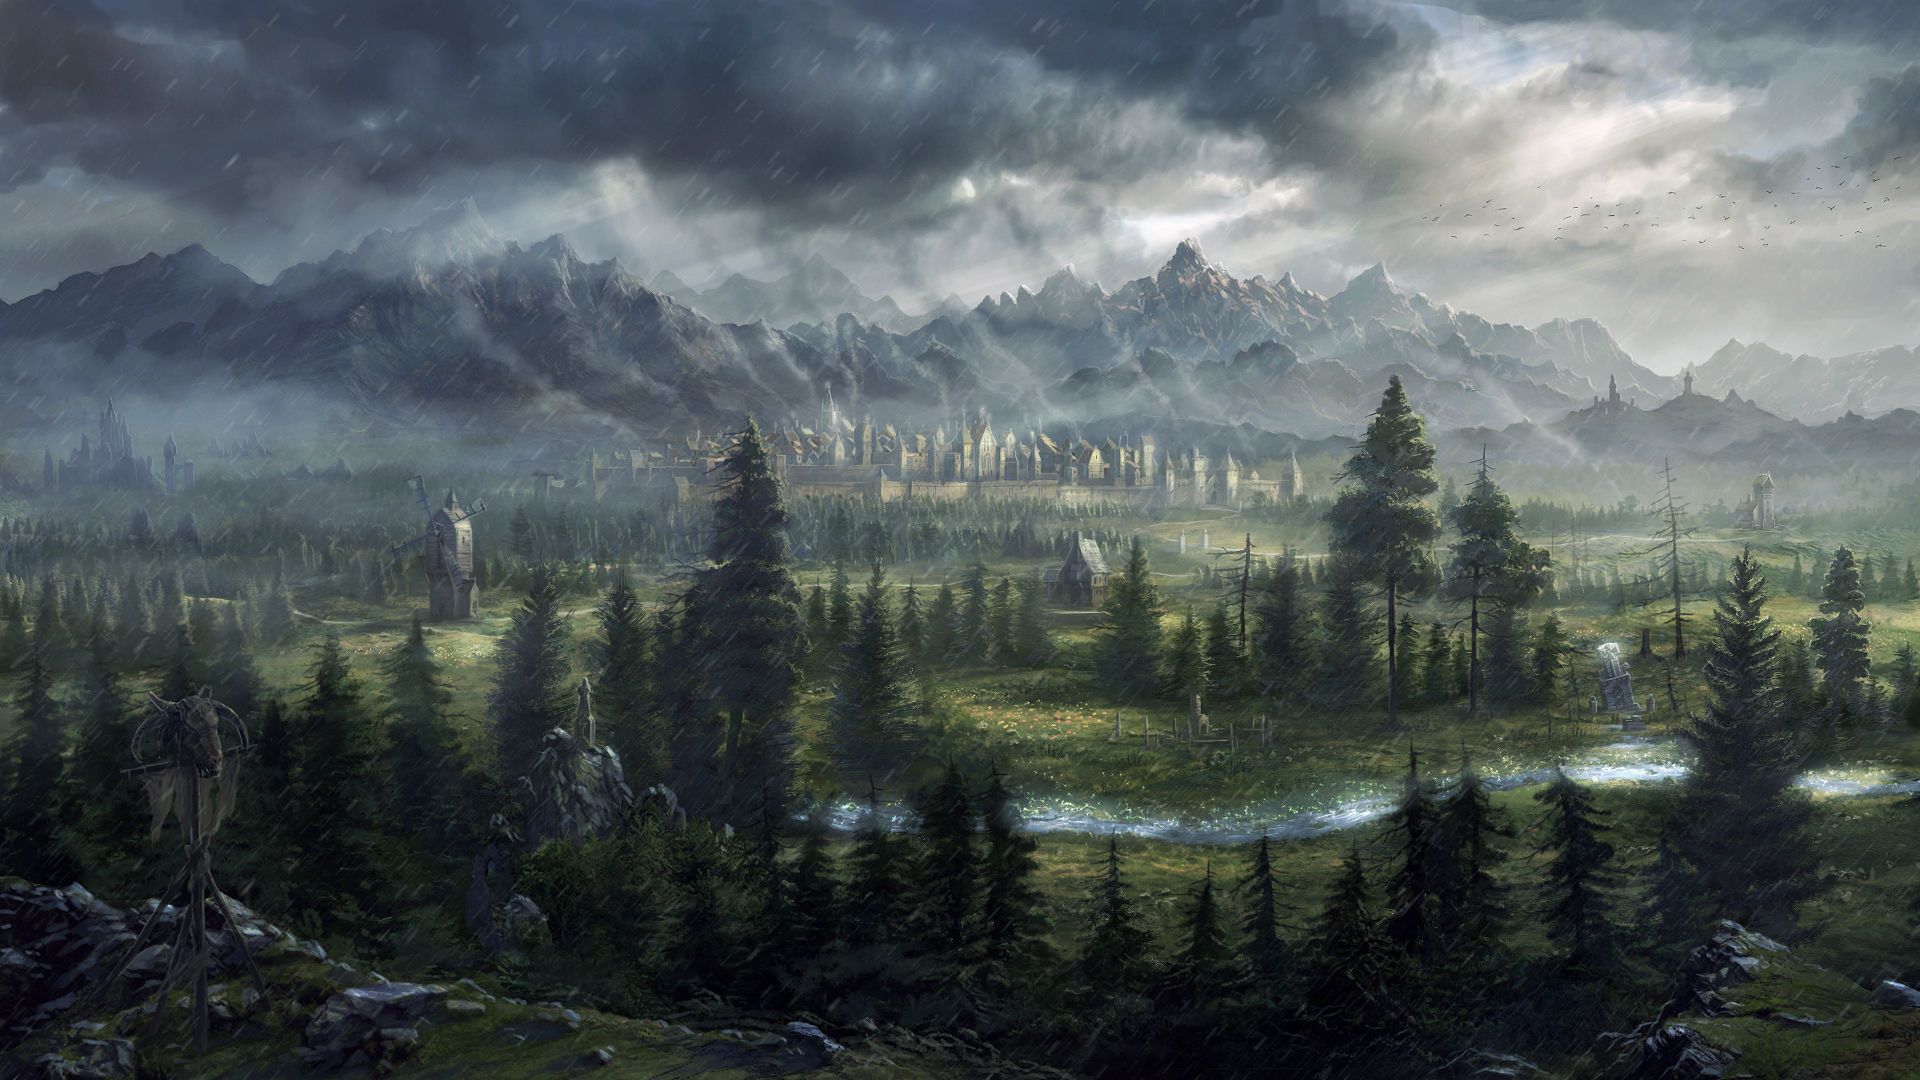 Digital Art Fantasy Art Total War Warhammer Trees Pine Trees Nature Landscape Mountains Clouds Rain  1920x1080